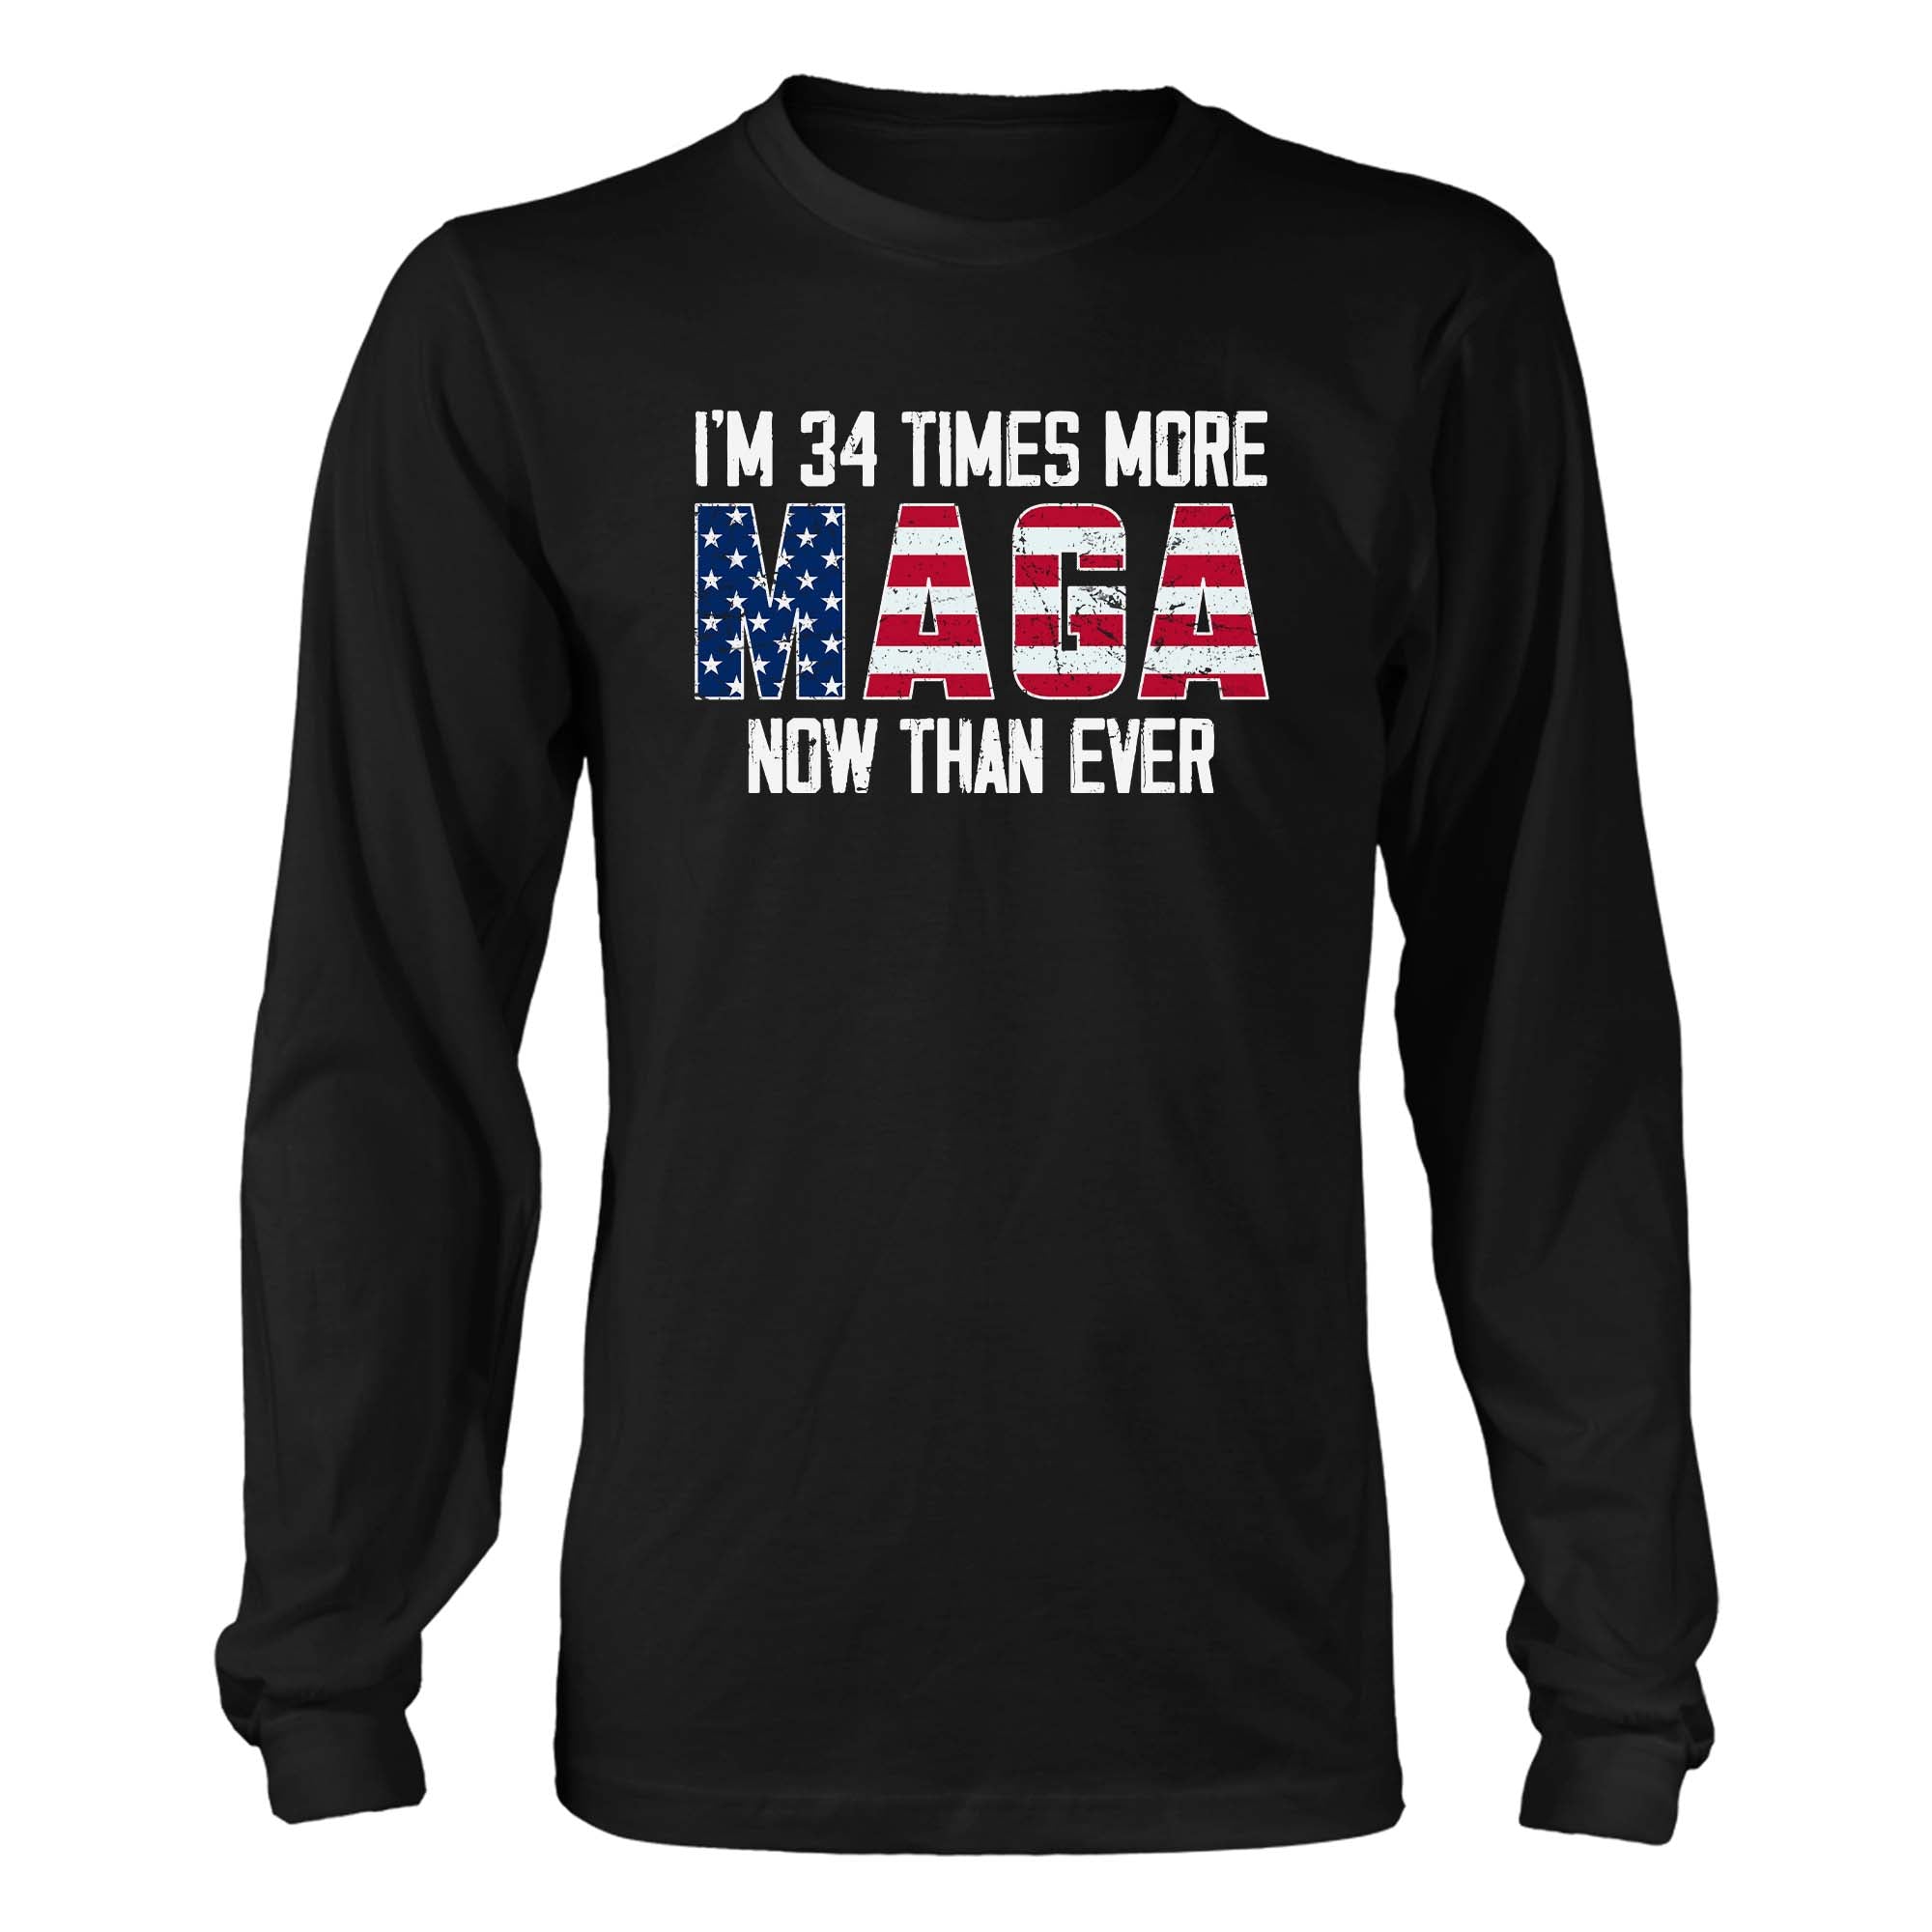 I'm 34 Times More Maga Now Than Ever T-Shirt - GB74